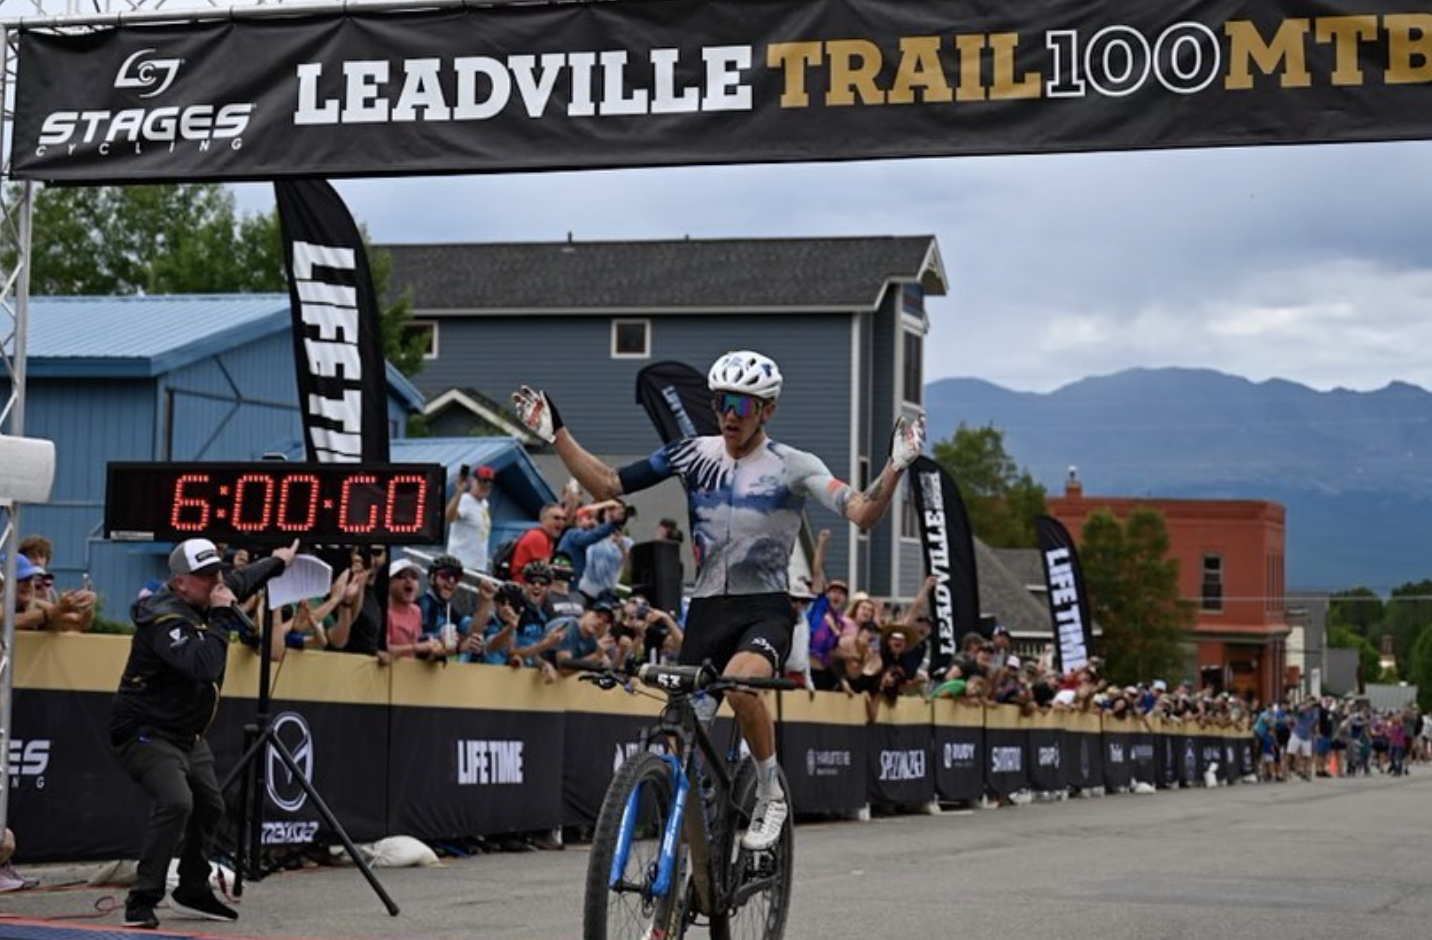 Kwijtschelding cafe Overeenkomstig met Keegan Swenson repeats at Leadville Trail 100 MTB | Cyclingnews